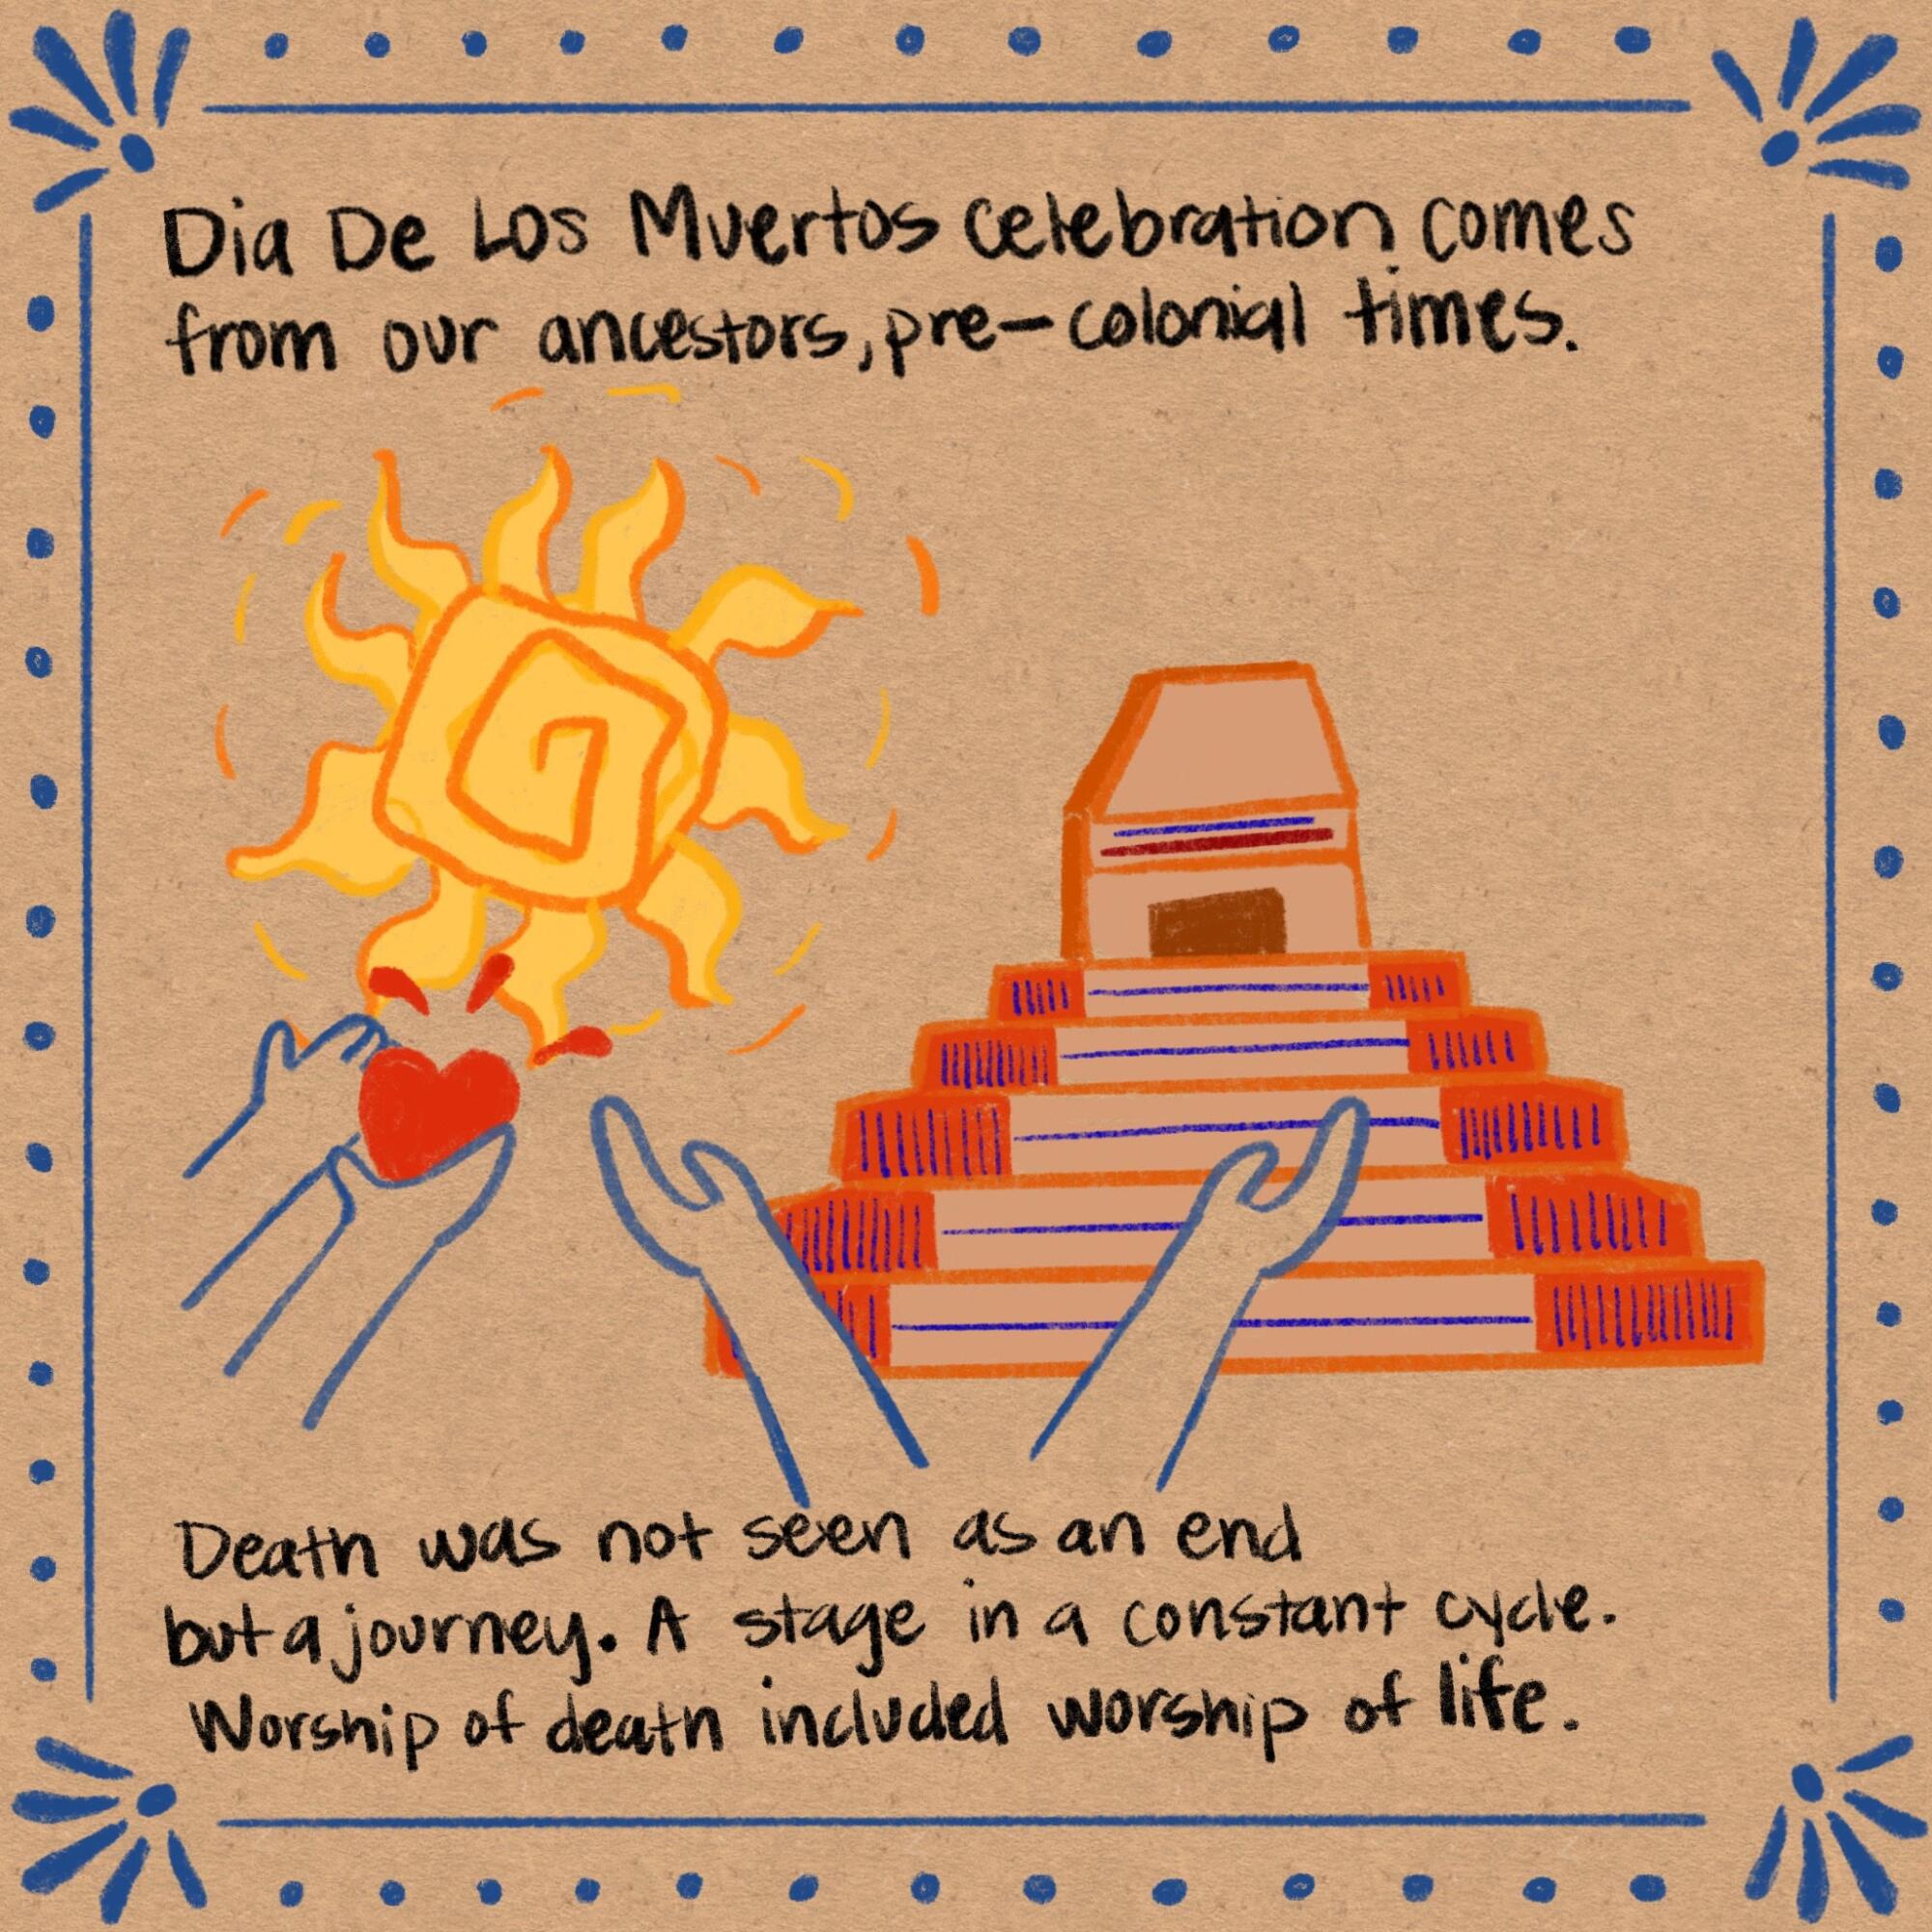 Día de los Muertos celebration comes from our ancestors, pre-colonial times.  Death was not seen as an end but a journey. 